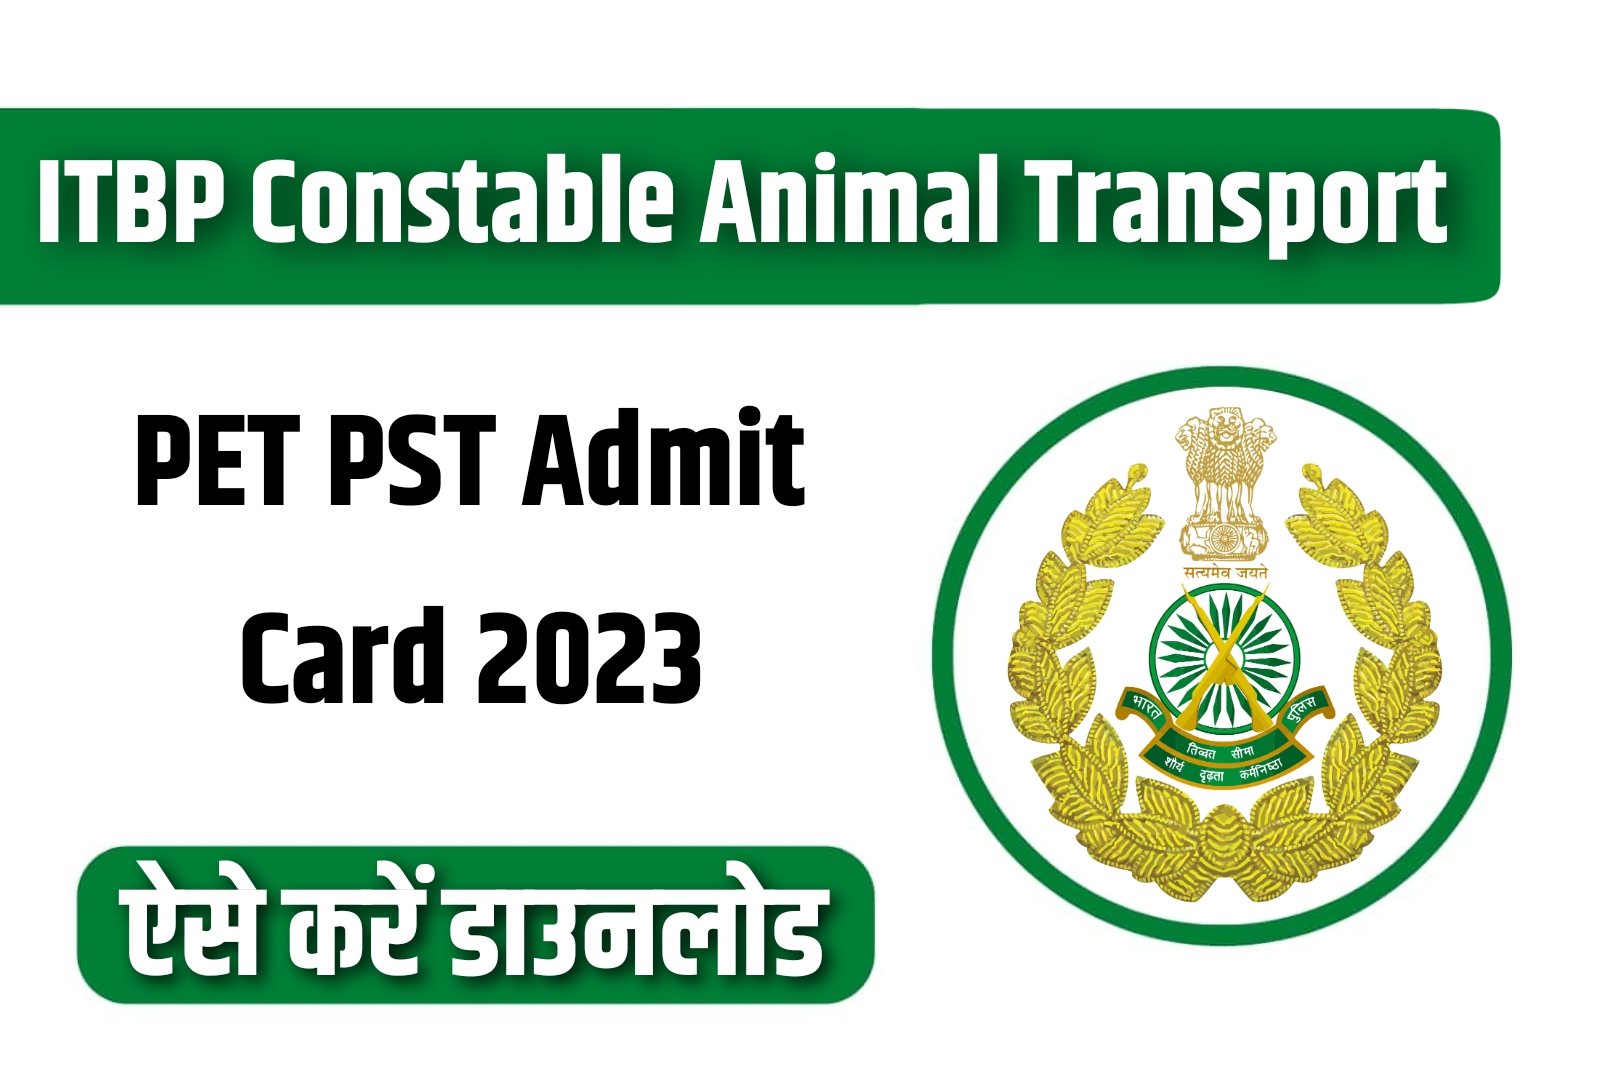 ITBP Constable Animal Transport PET PST Admit Card 2023 | आईटीबीपी एनिमल ट्रांसपोर्ट कांस्टेबल एडमिट कार्ड